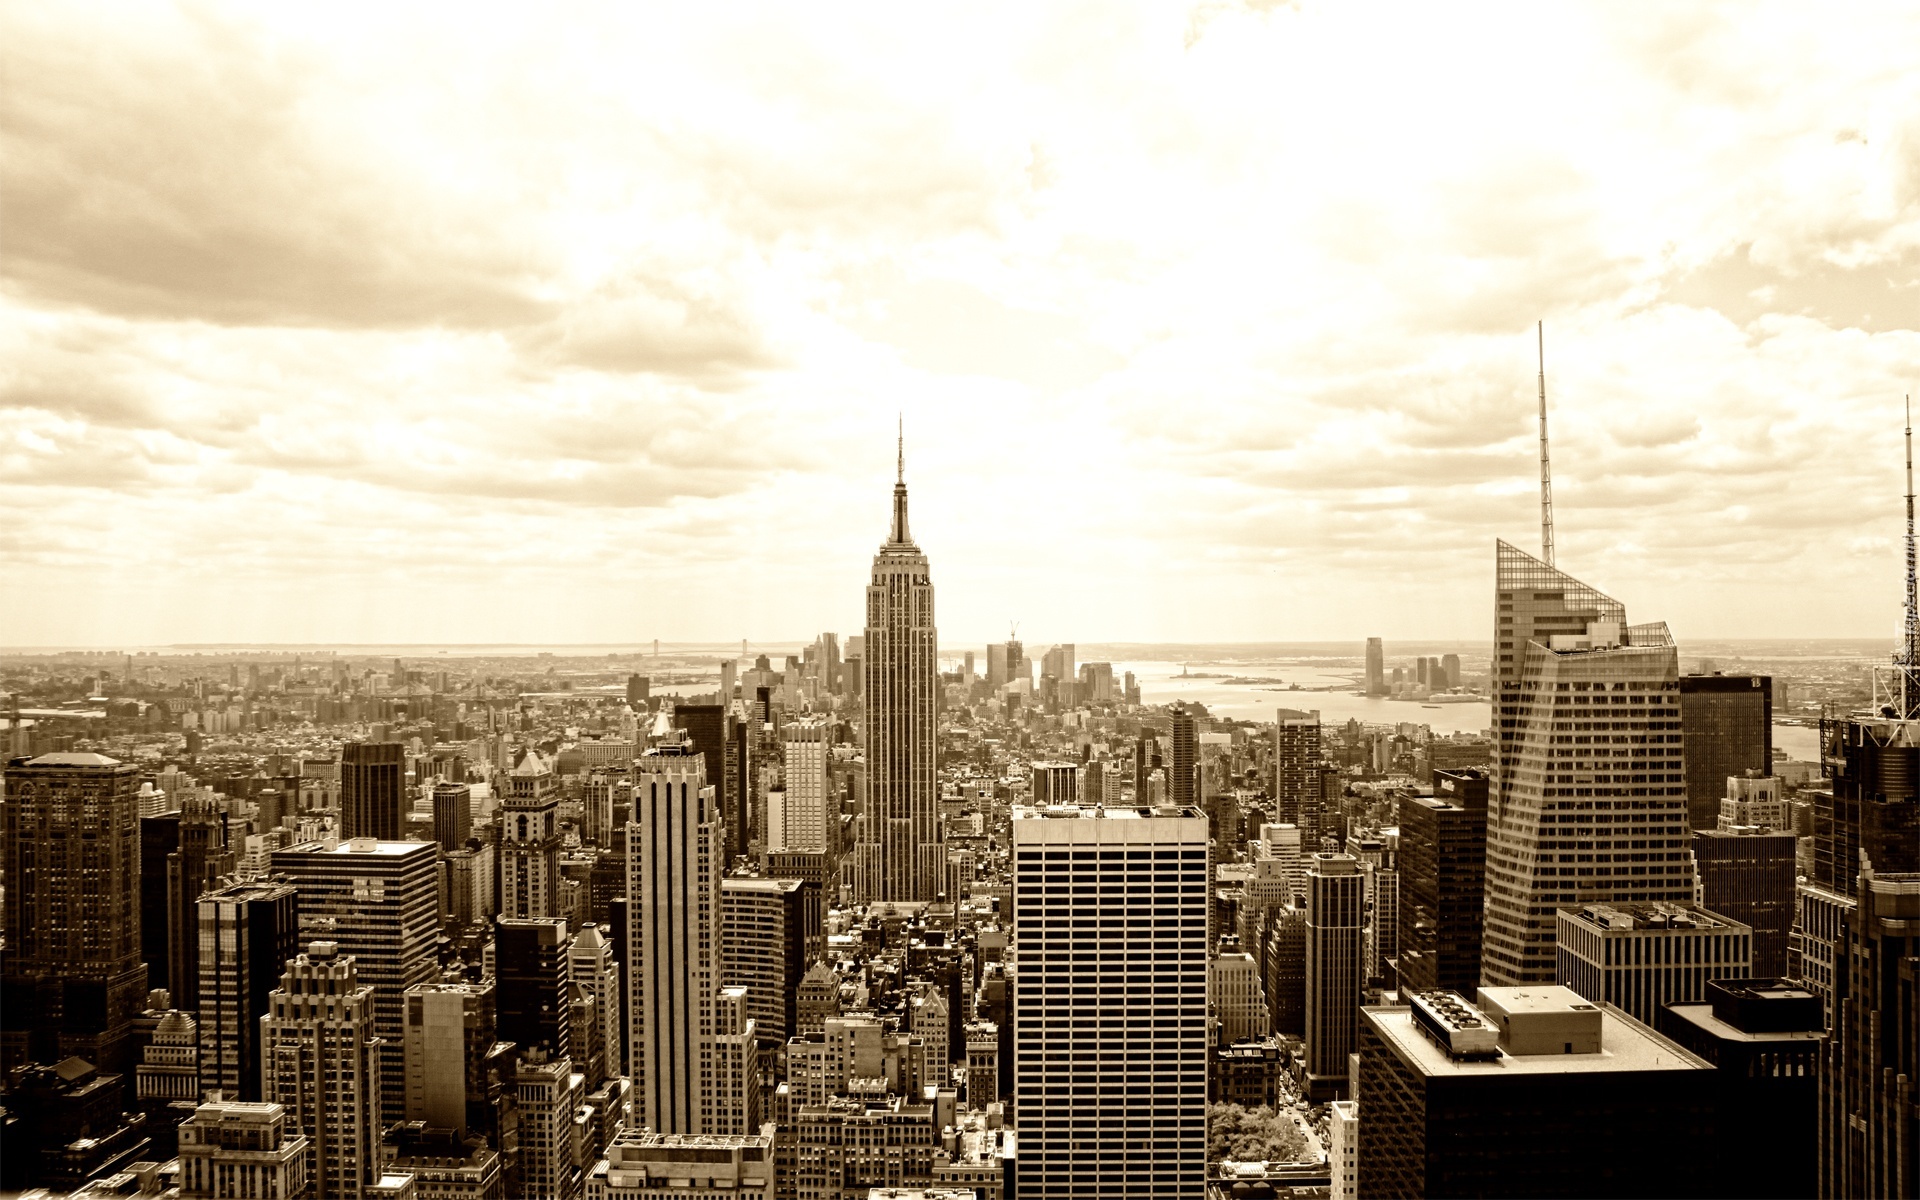 Miasto, Drapacze, Chmur, Nowy, Jork, Empire State Building